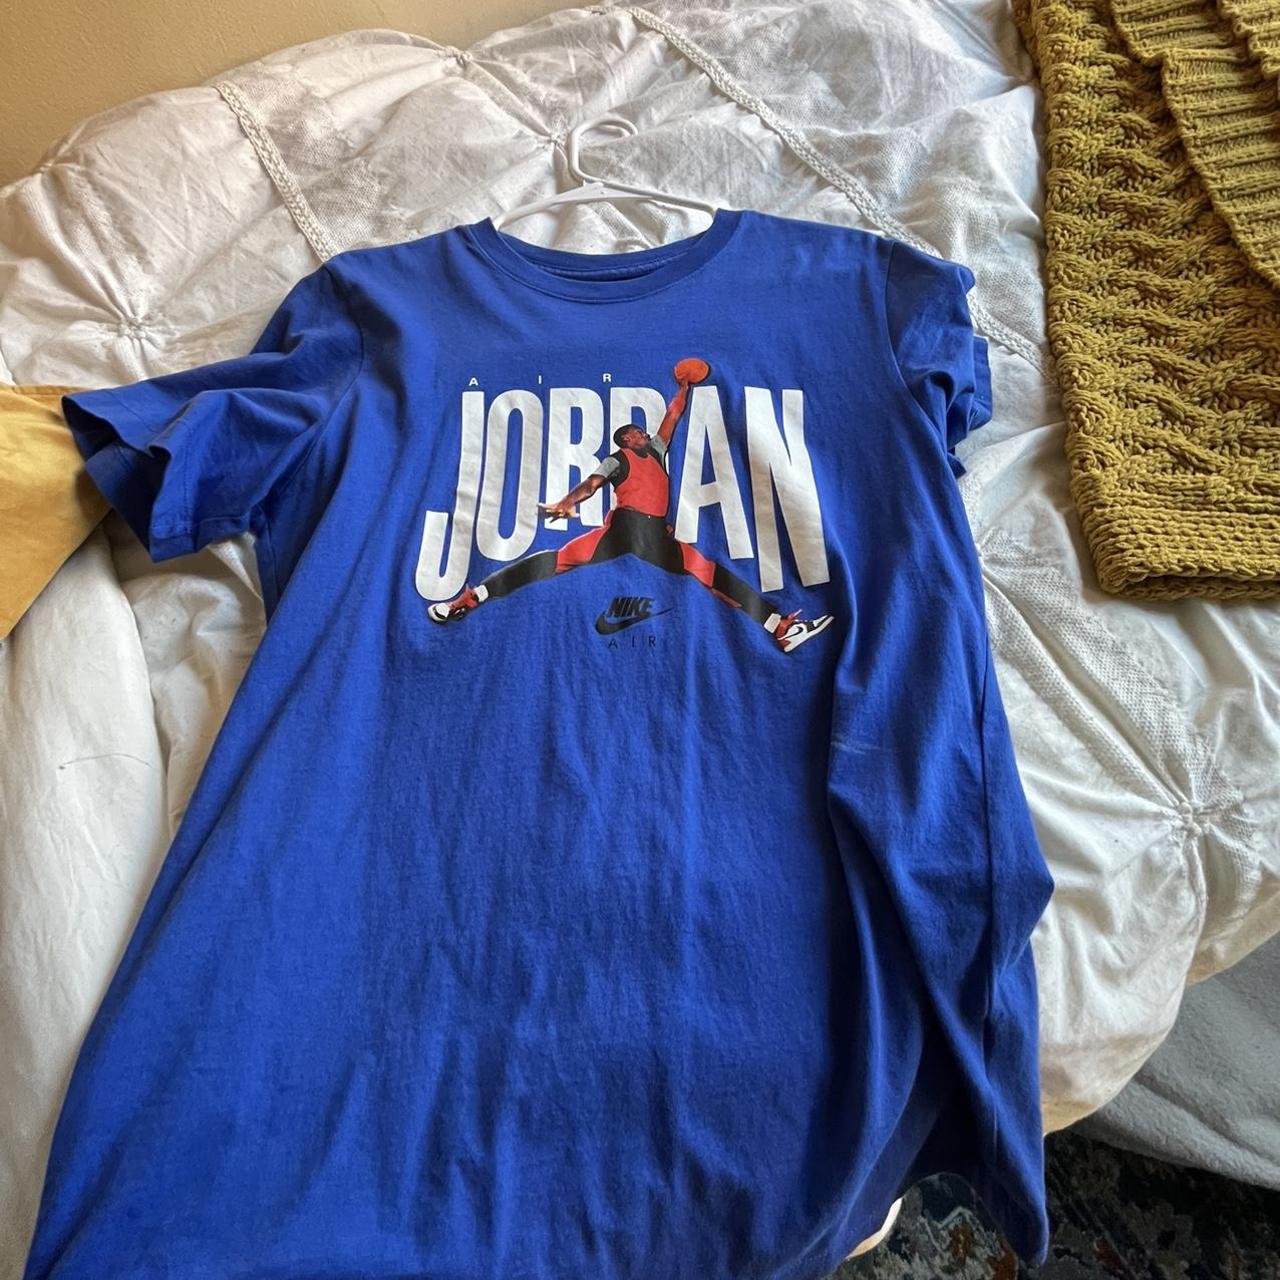 Jordan Men's T-shirt | Depop